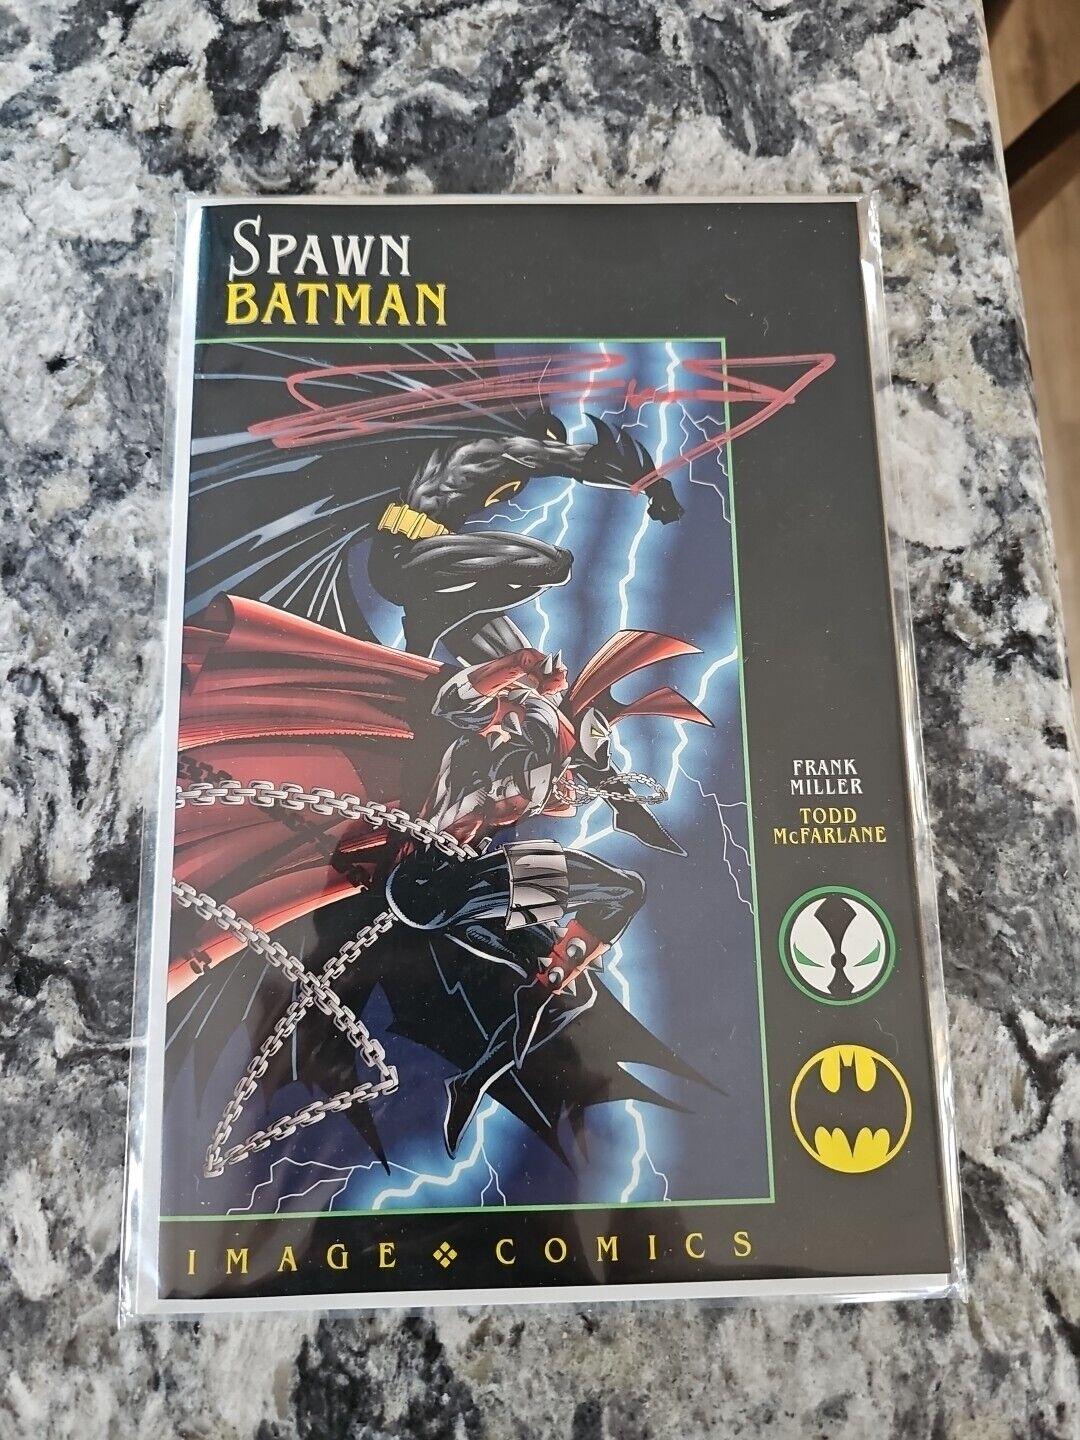 Todd McFarlane Spawn Batman #1 Image Comics 1994 SIGNED  by Frank Miller w/ COA